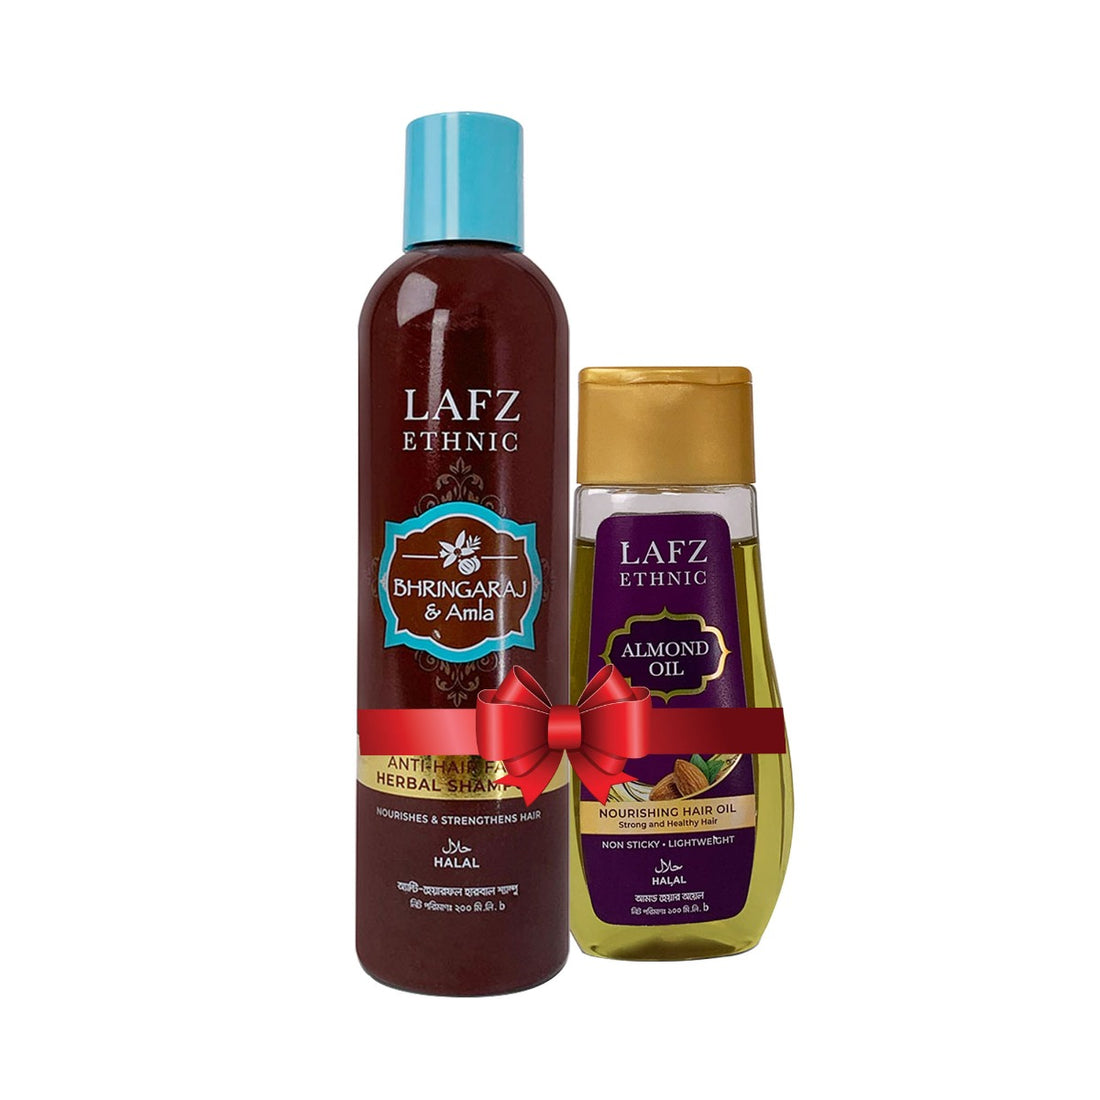 Lafz Ethnic Hair Oil And Shampoo Combo